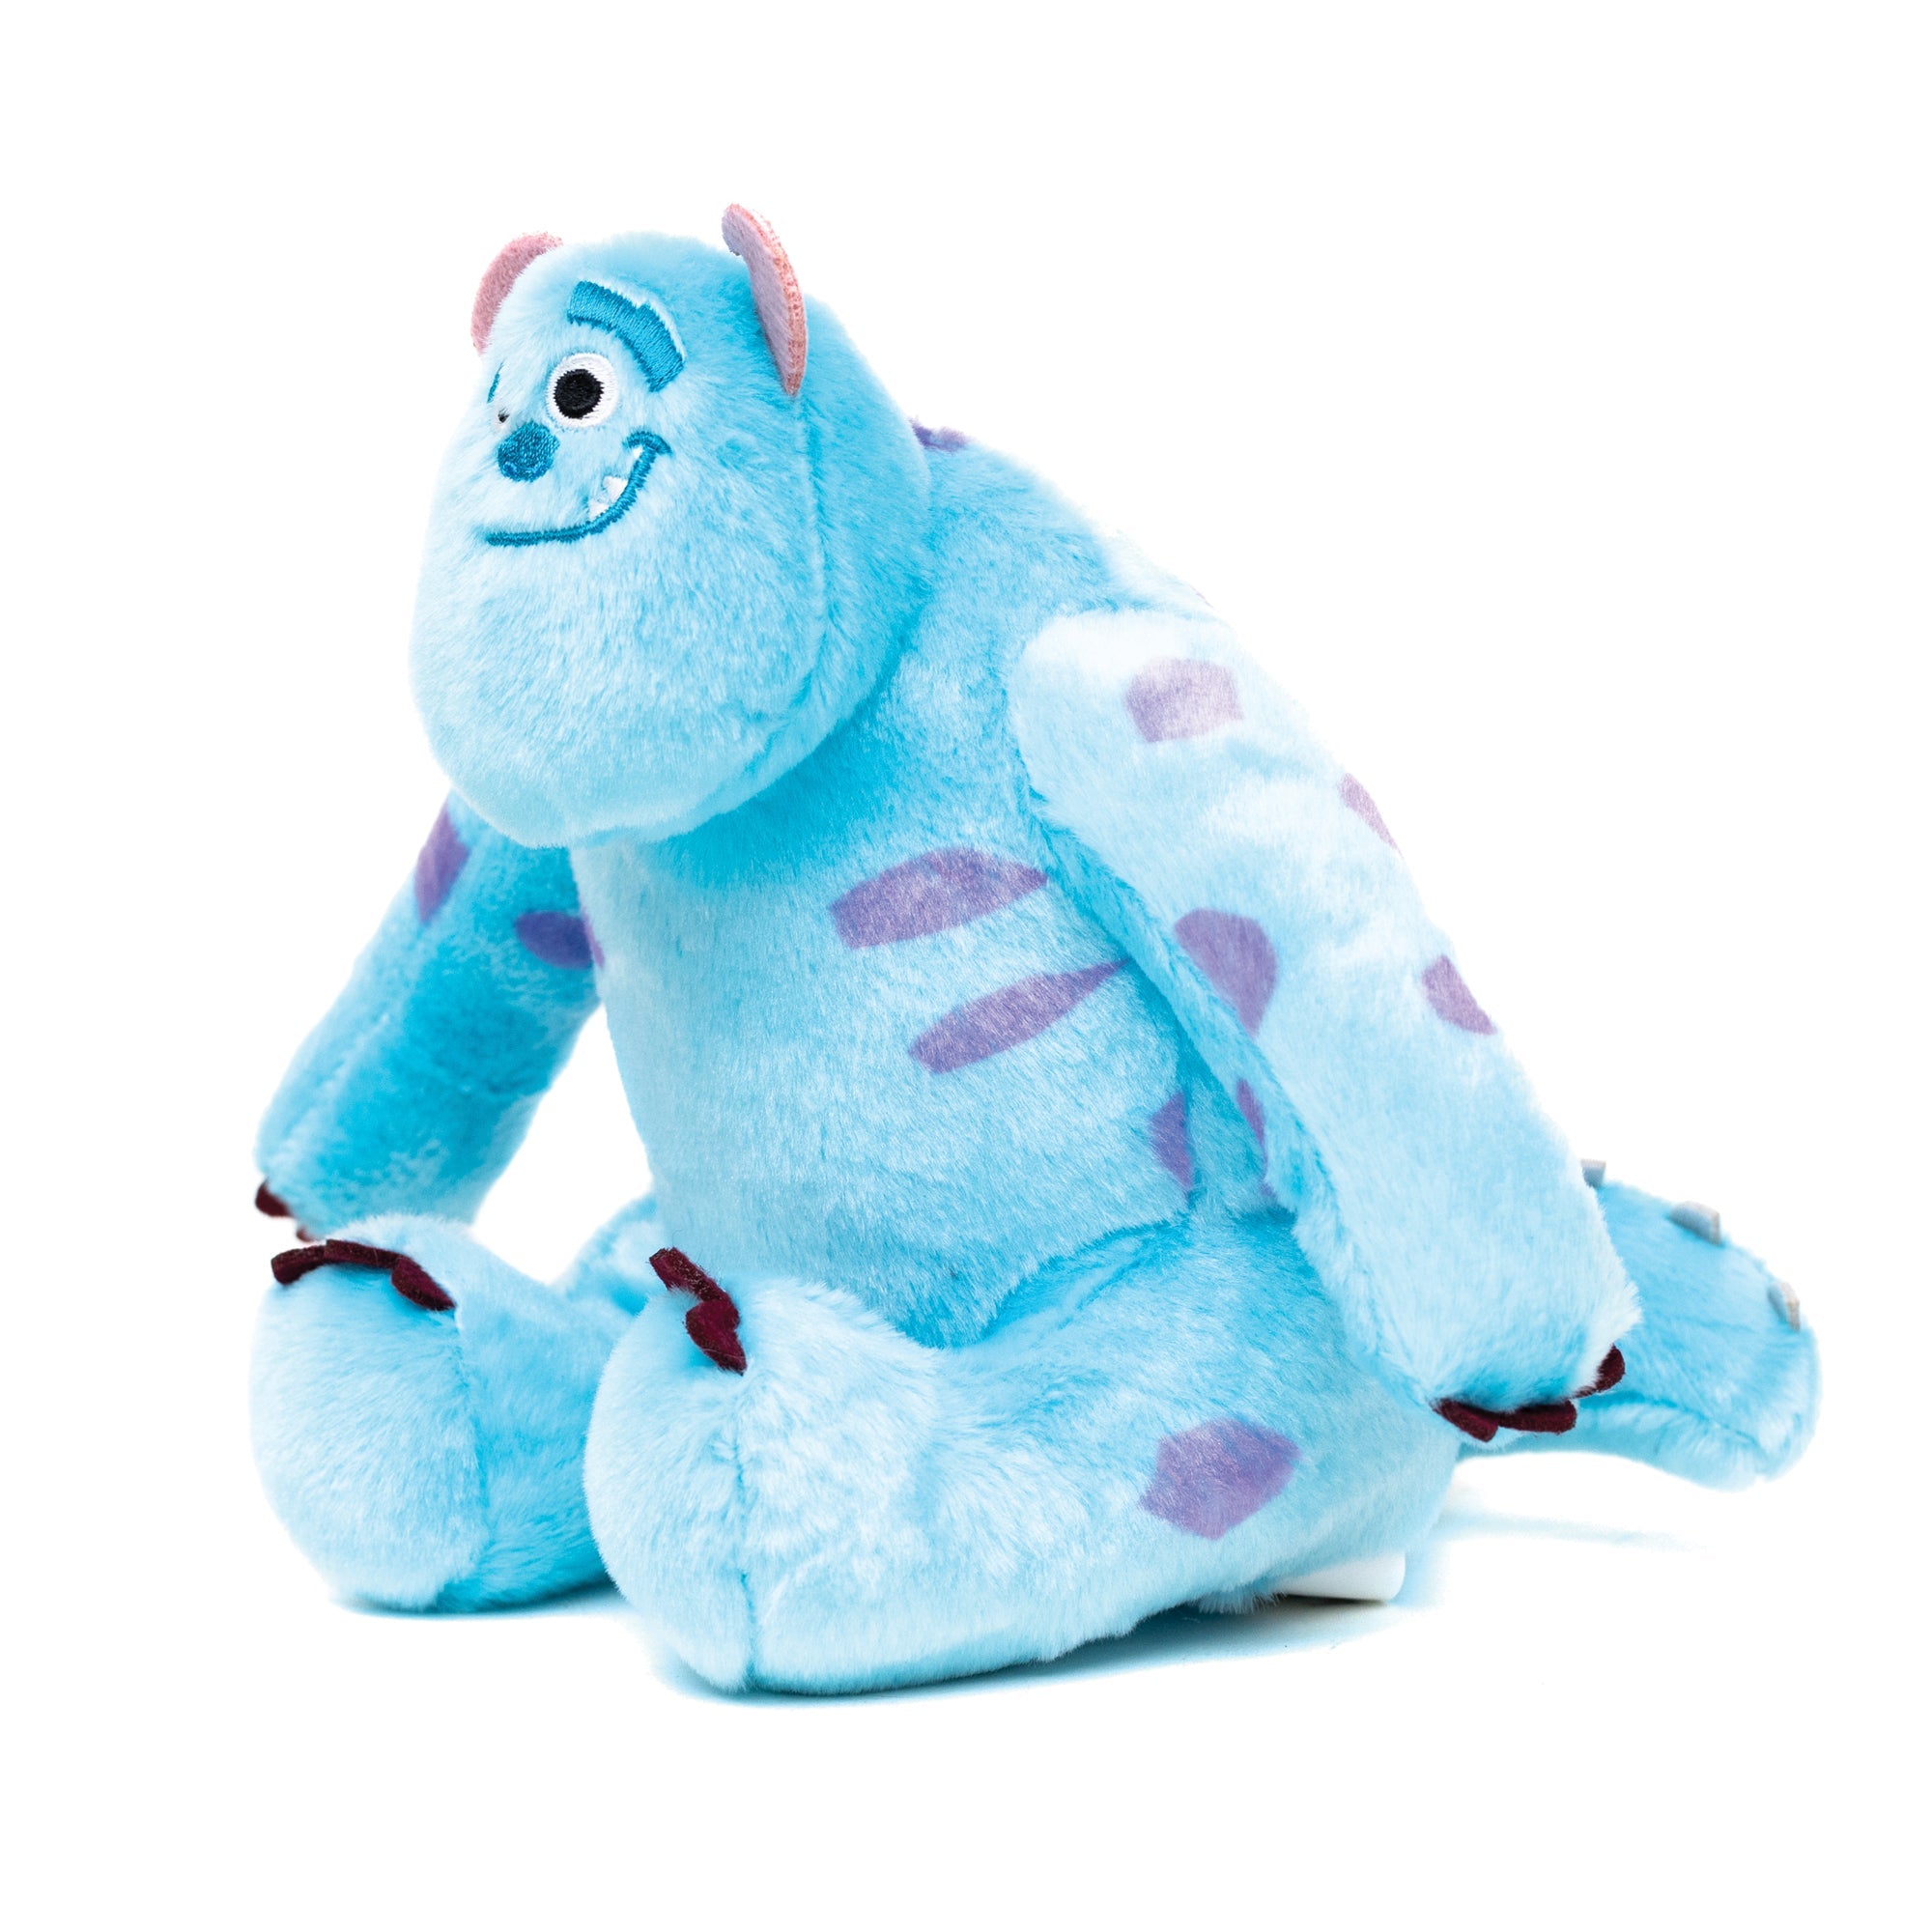 Disney Pixar Monsters Inc. Sulley Plush Squeaker Dog Toy